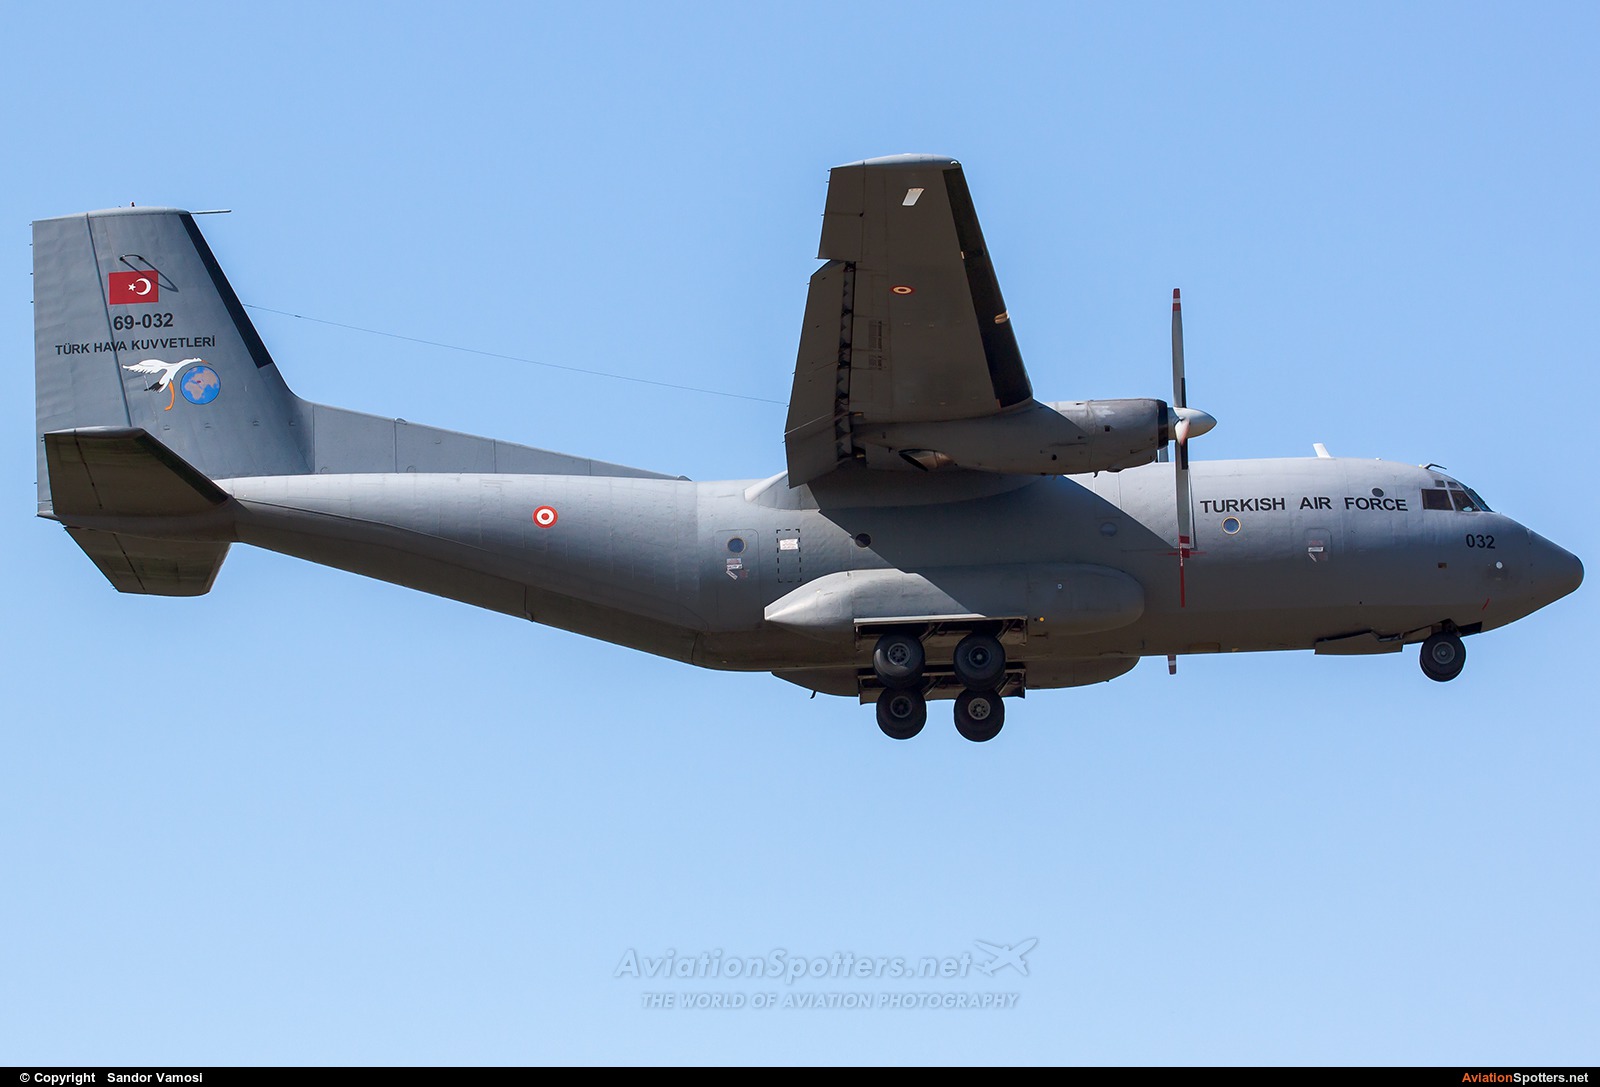 Turkey - Air Force  -  C-160D  (69-032) By Sandor Vamosi (ALEX67)